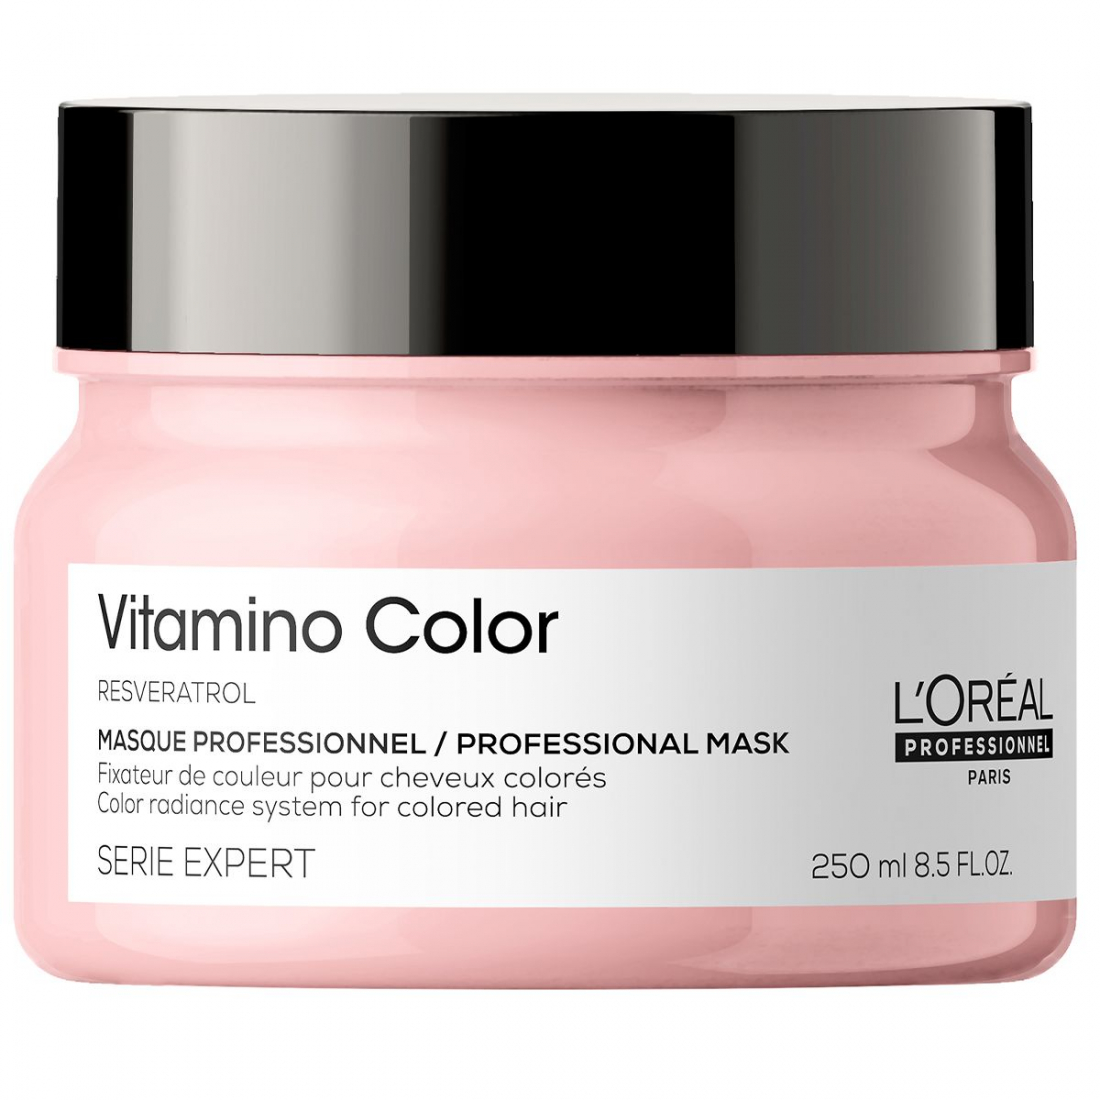 'Vitamino Color' Hair Mask - 250 ml